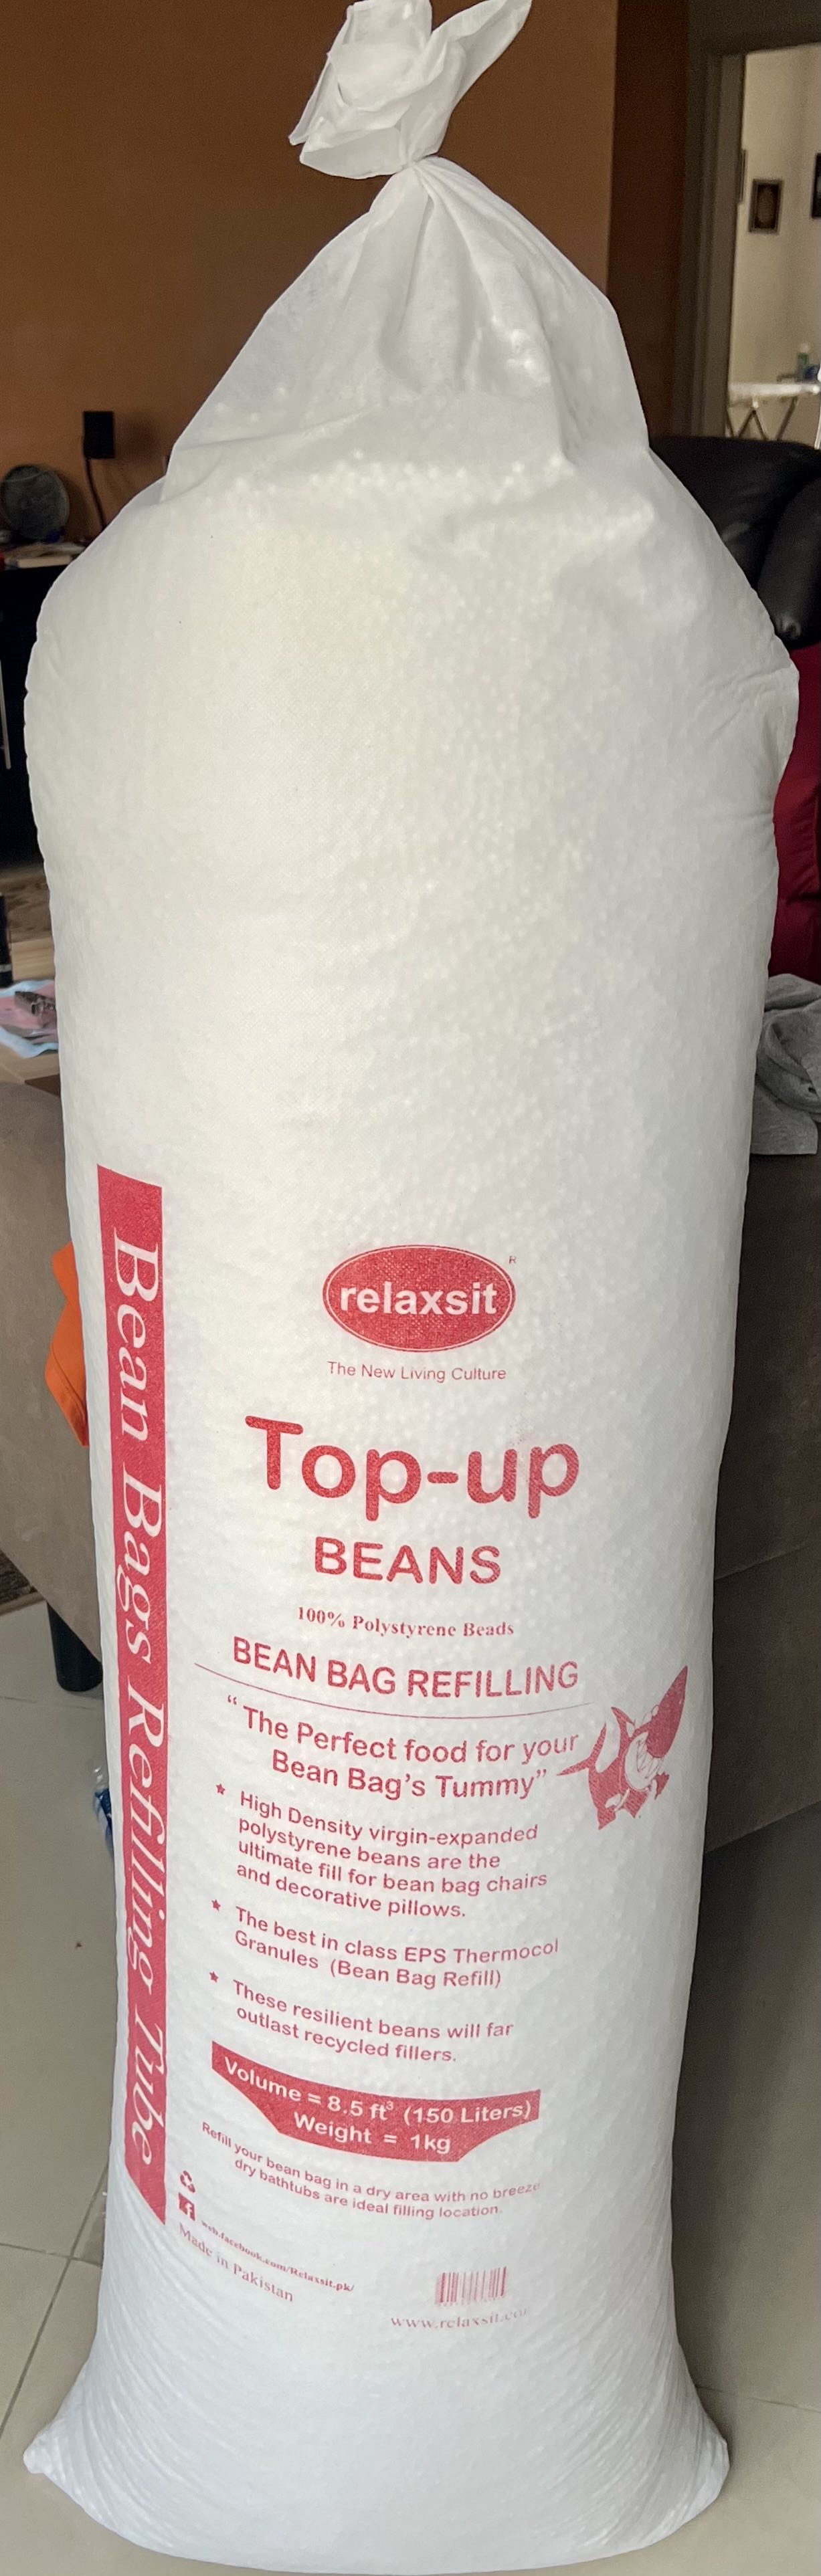 Relaxsit bean bag refill Premium Quality Polystyrene Beads for